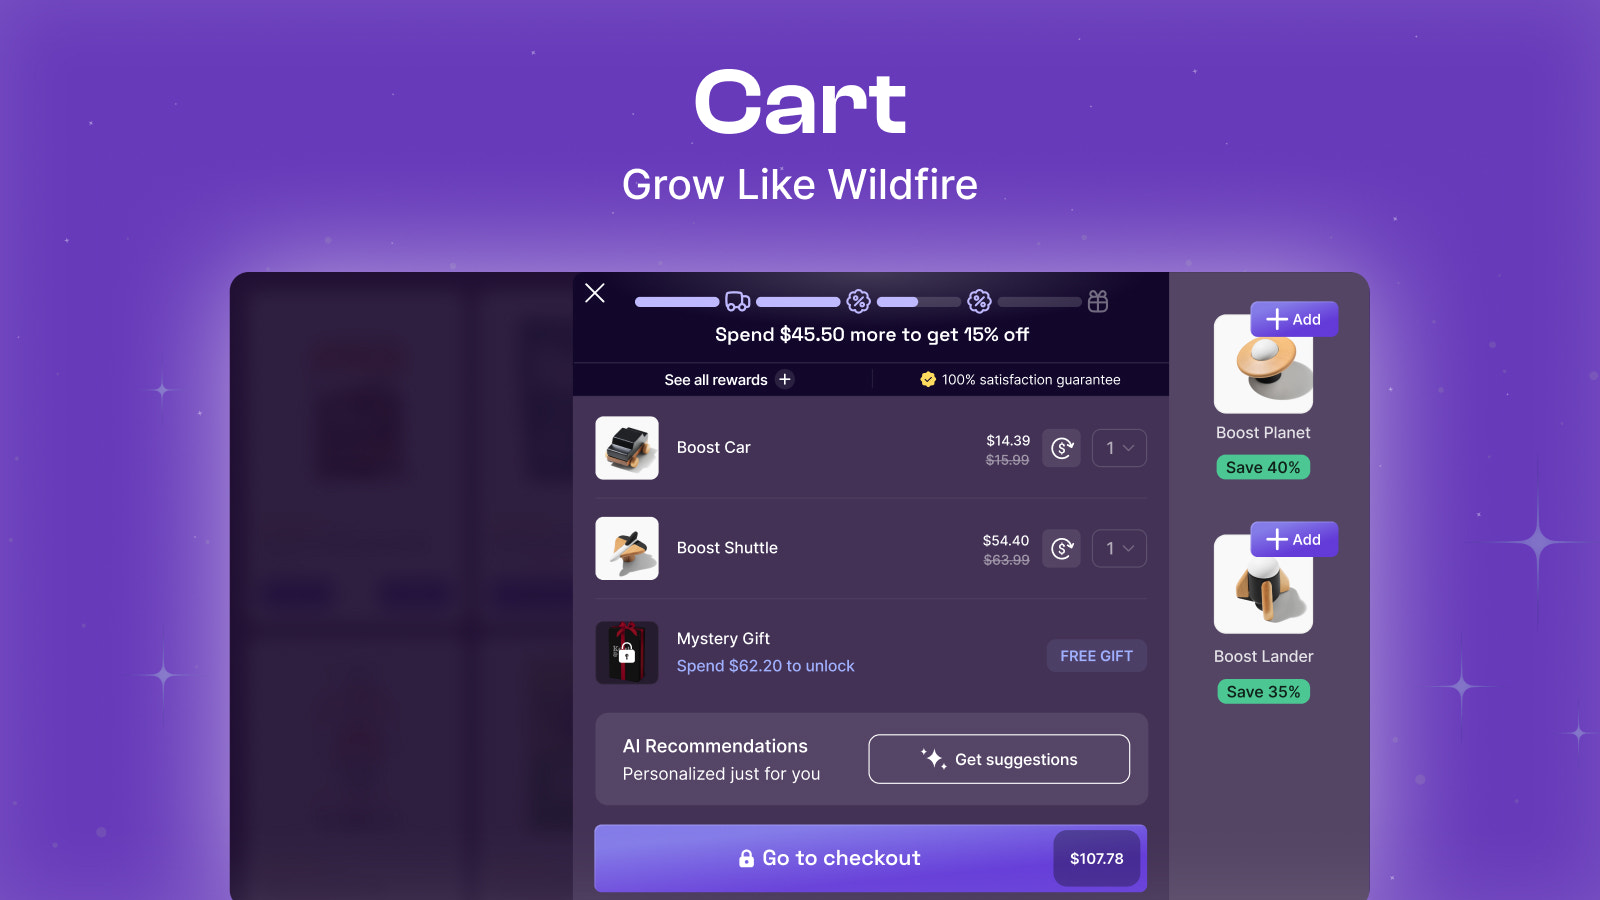 Cart - Grow Like Wildfire